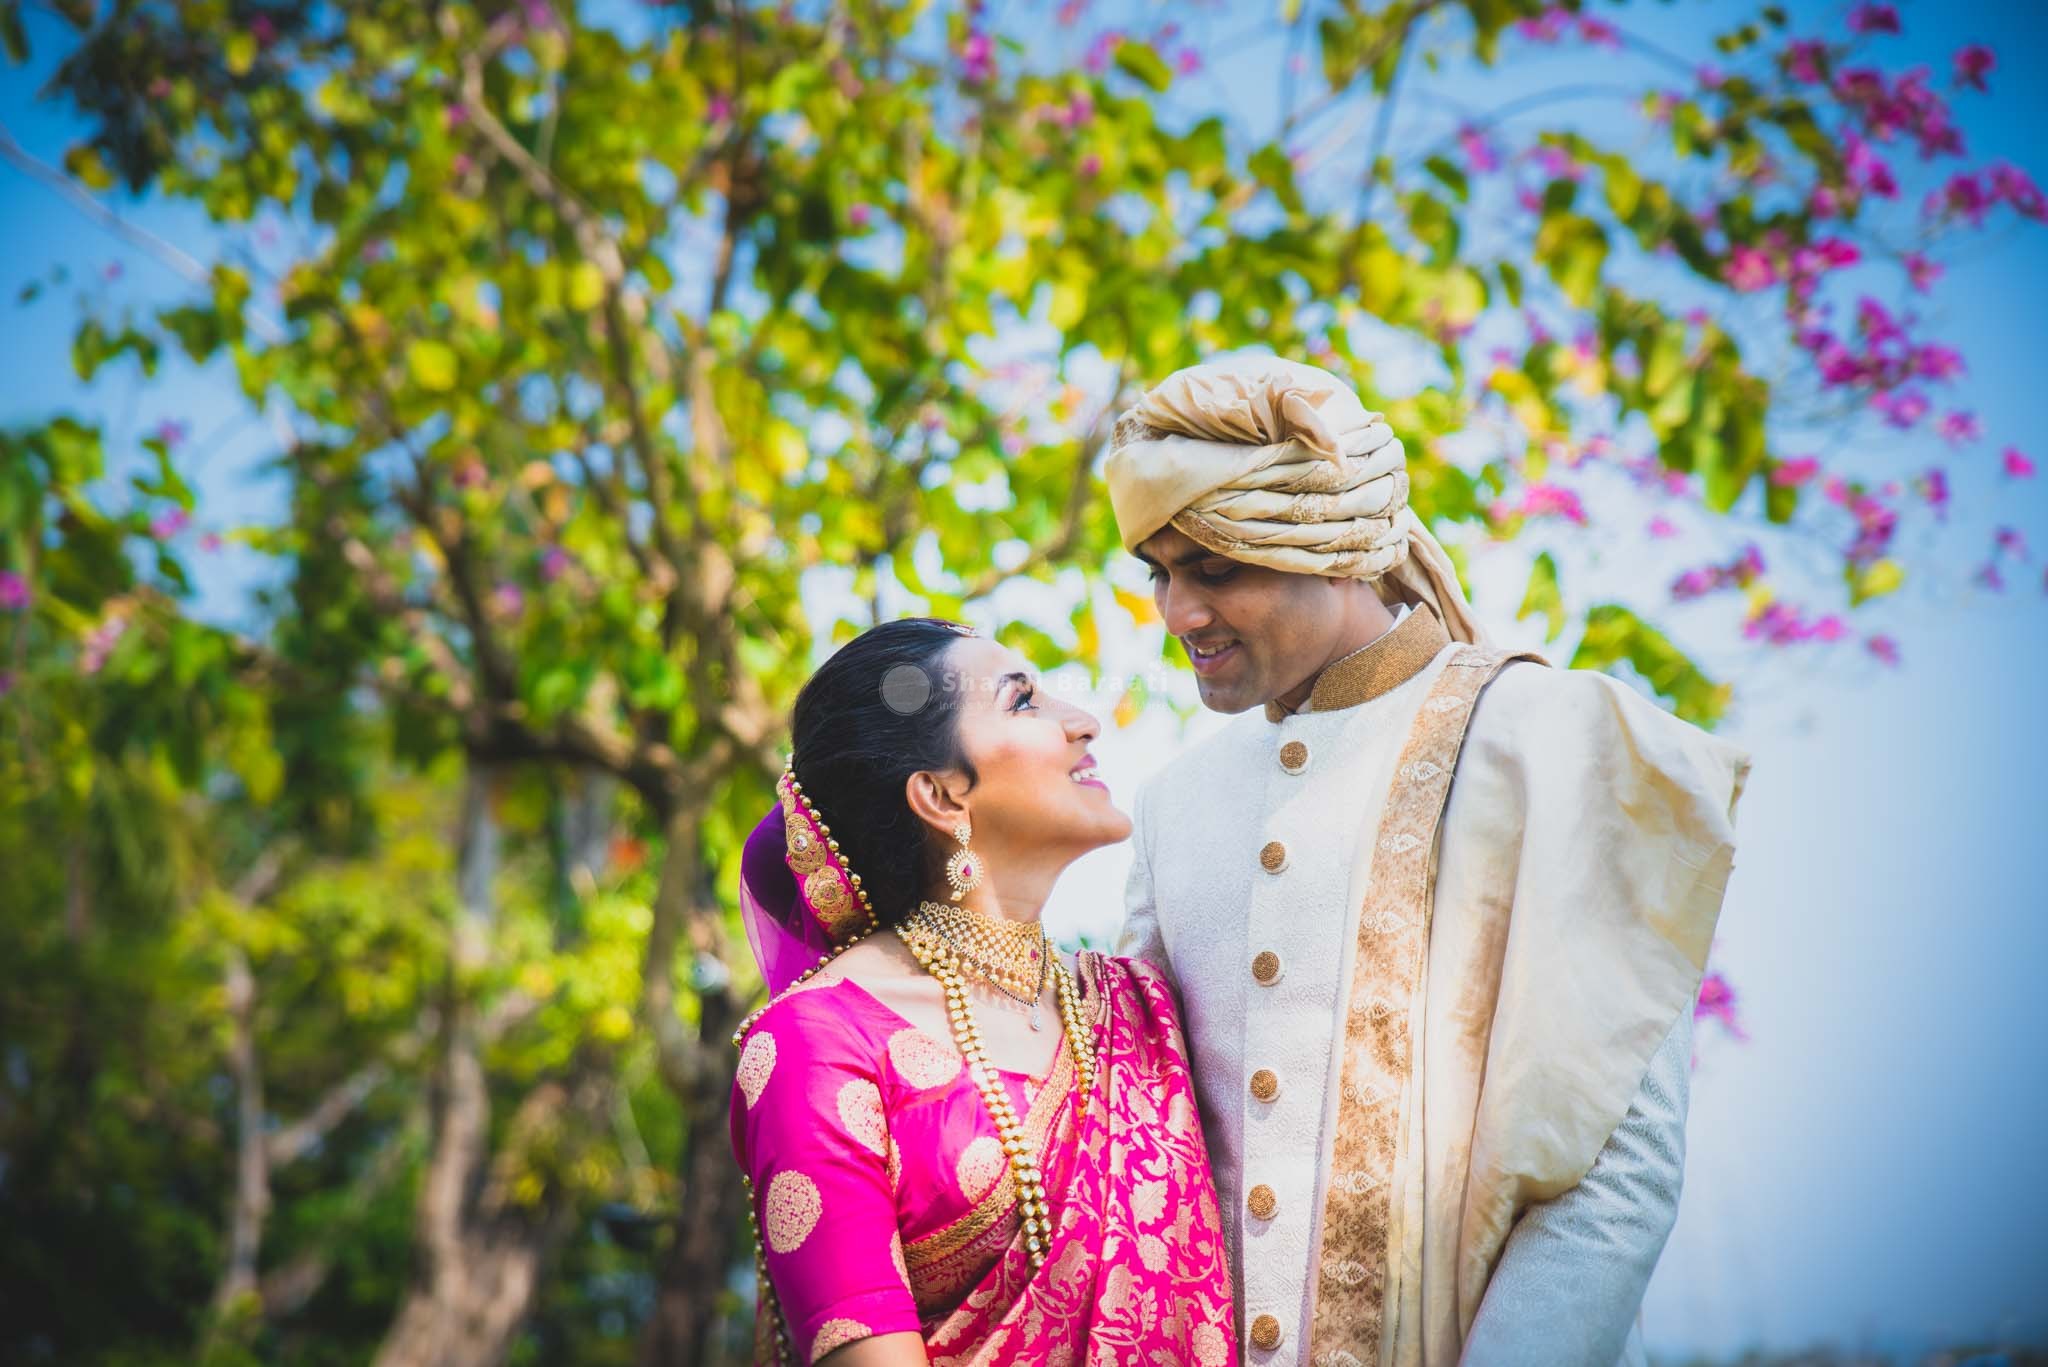 Devayani & Sagar's Aussie-Indian marathi wedding in Pune - Girish Joshi |  Wedding photographers in Pune & Mumbai